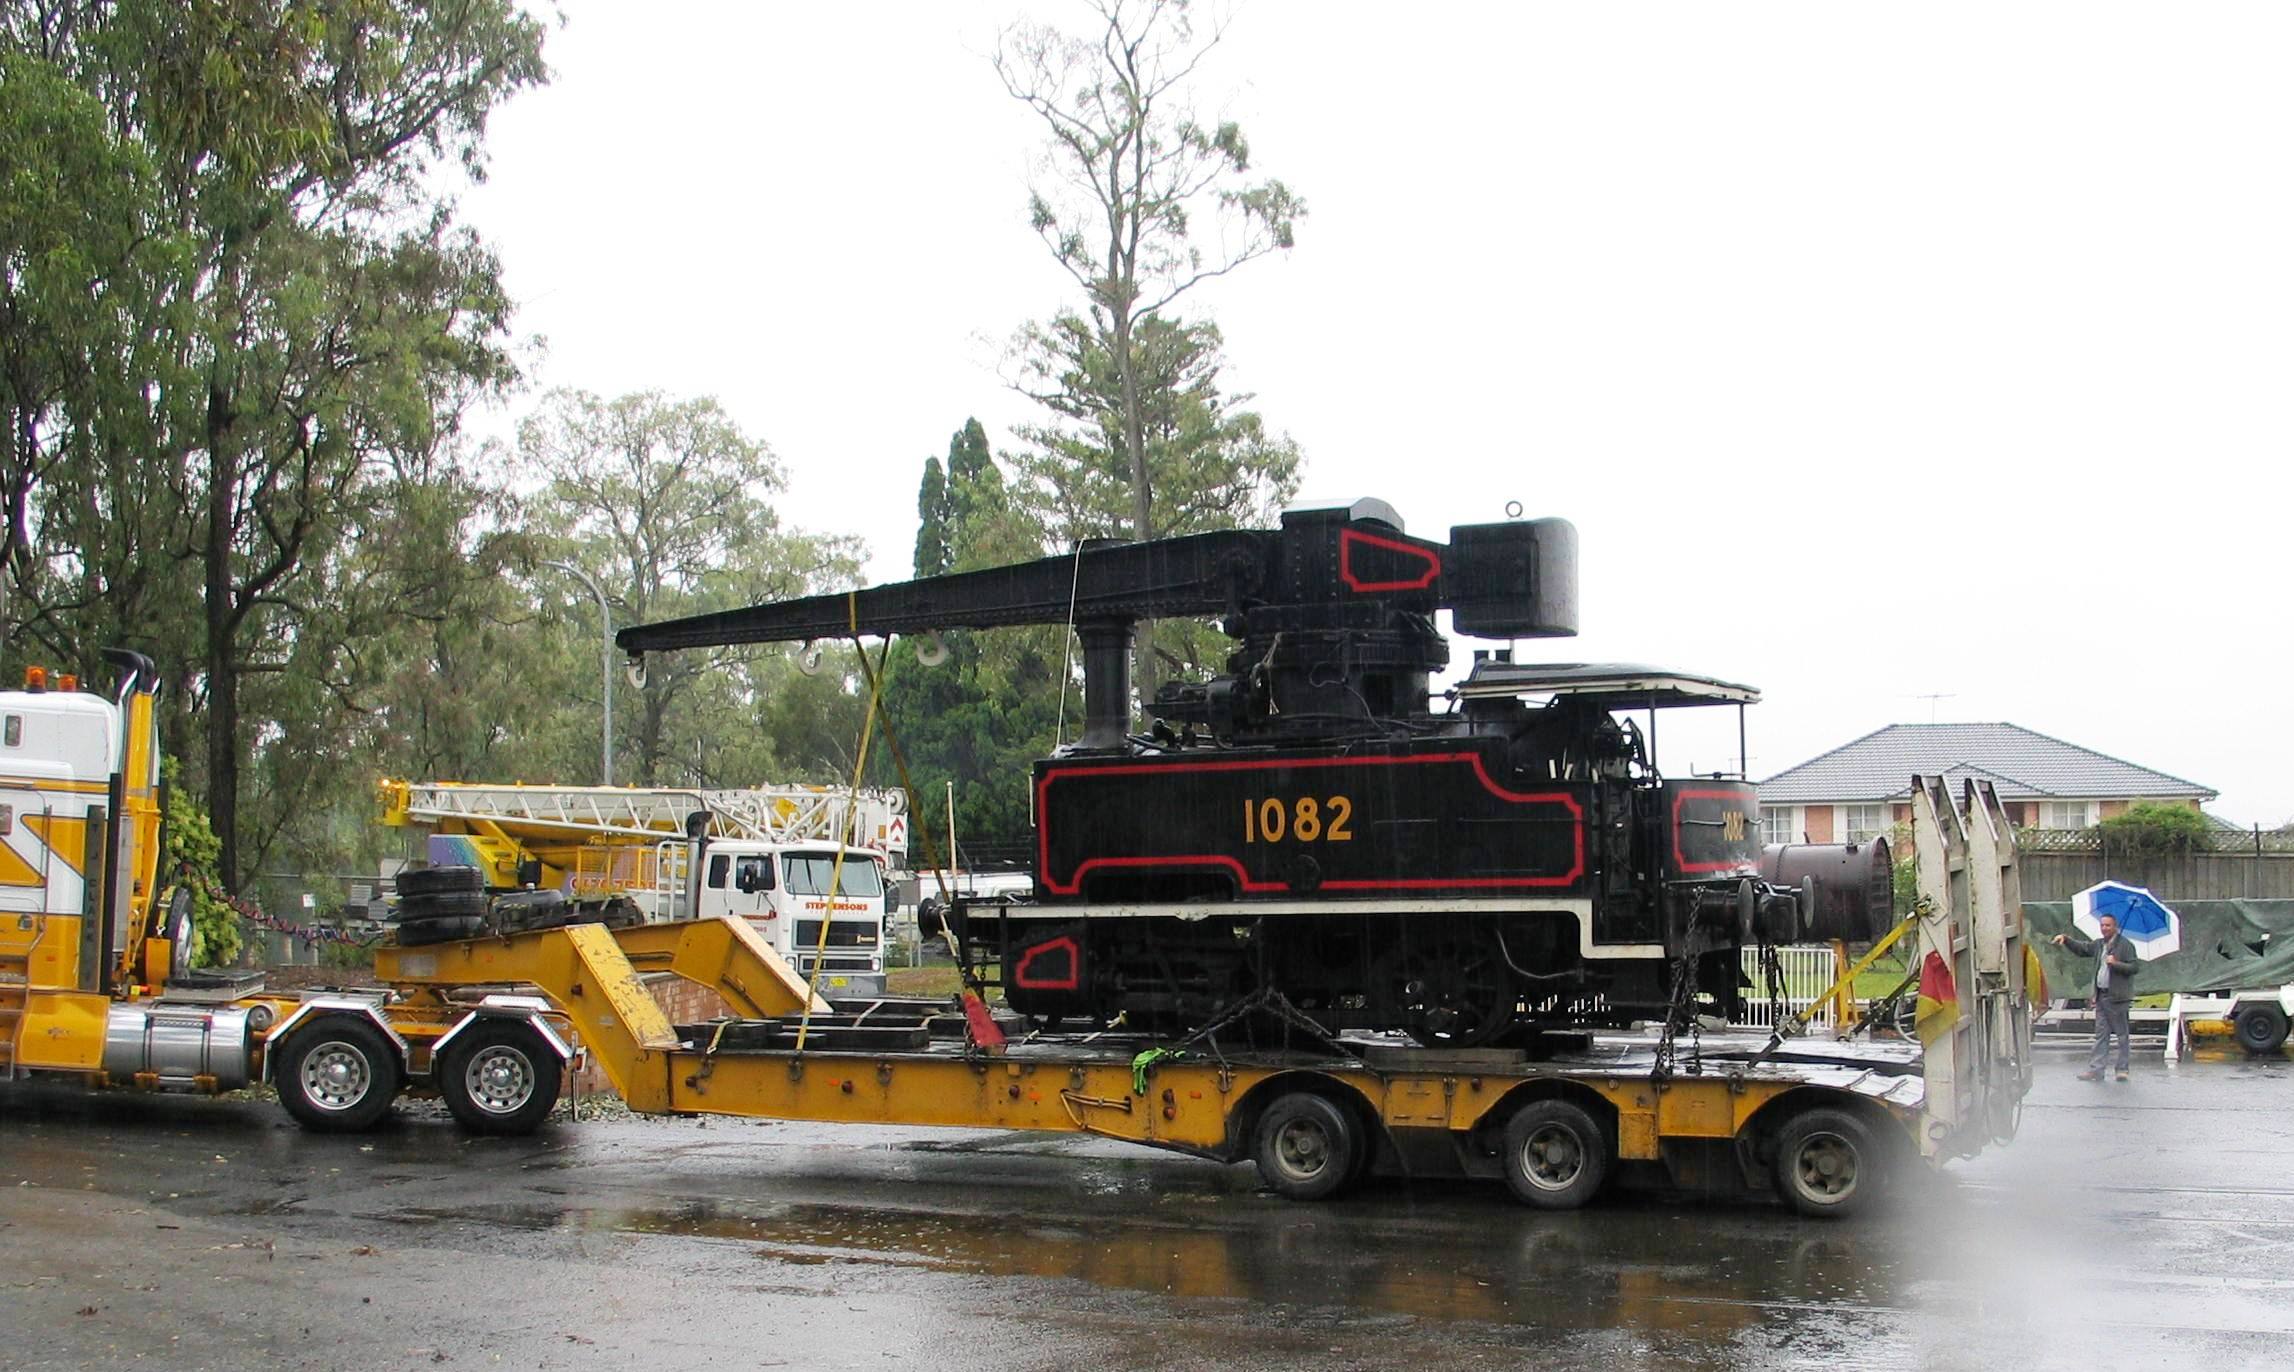 Robert Stephenson-Hawthorn crane locomotive 1082